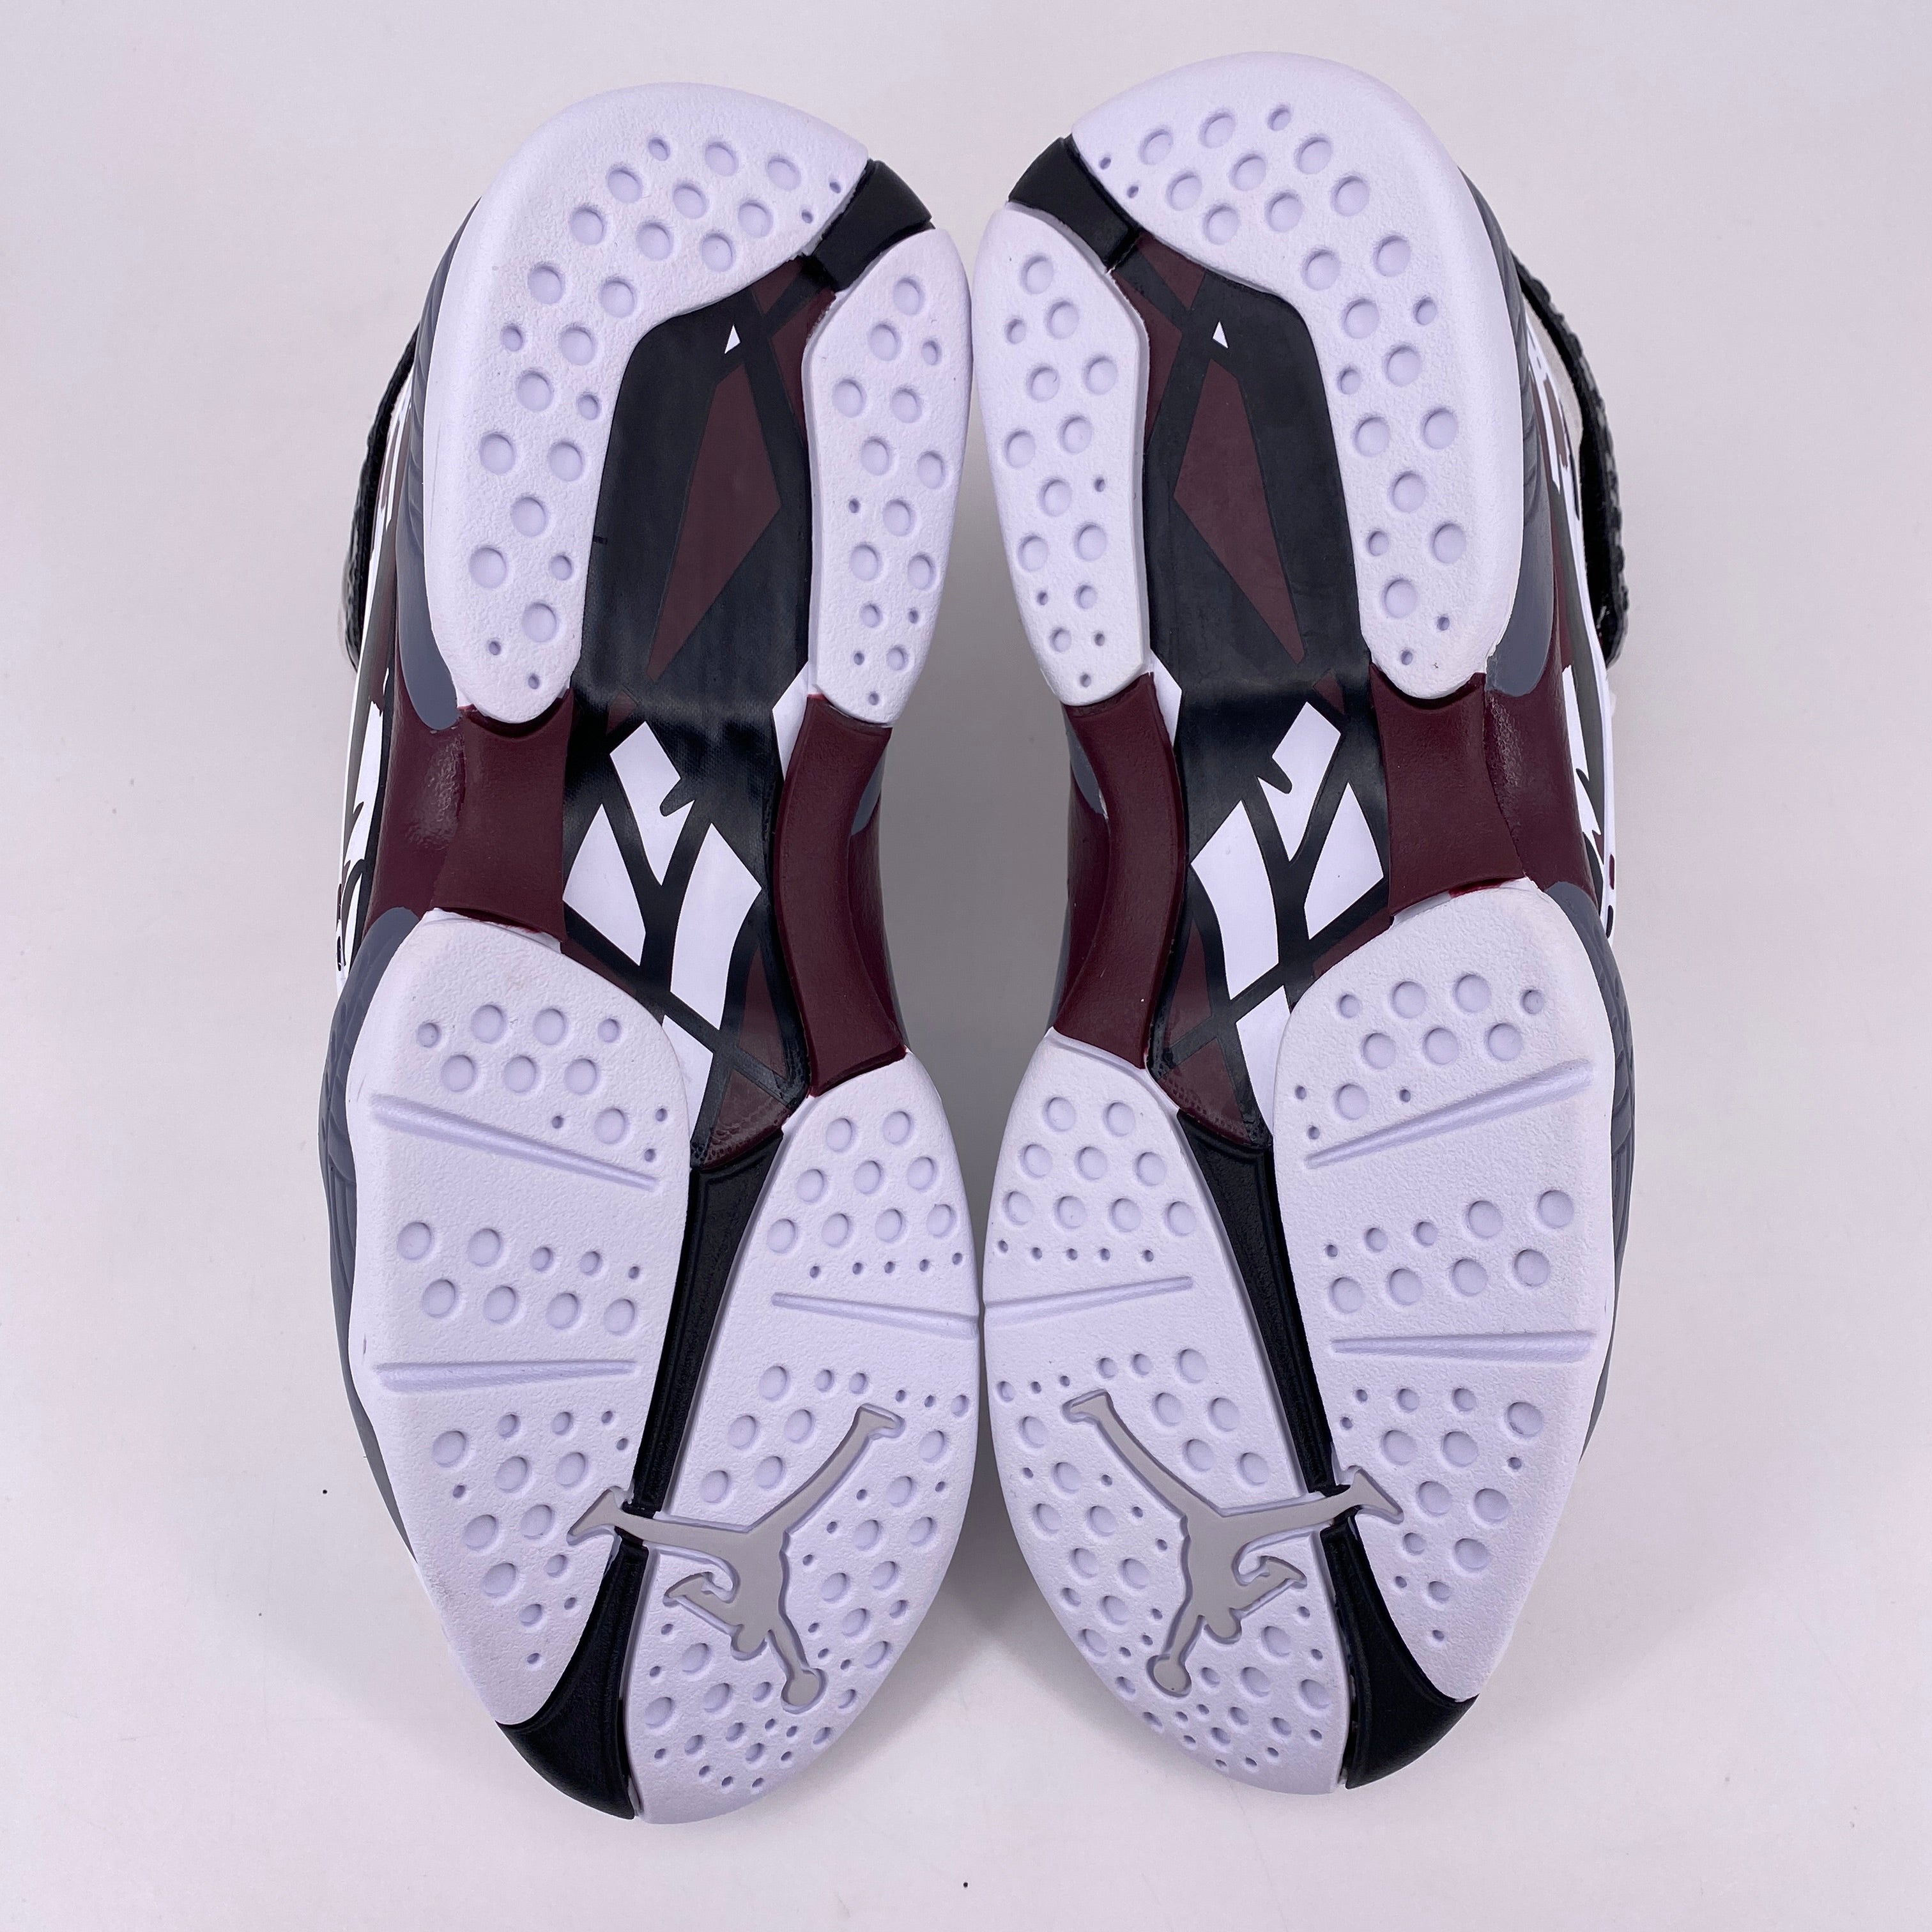 Air Jordan (W) 8 Retro "White Burgundy" 2020 New Size 9.5W